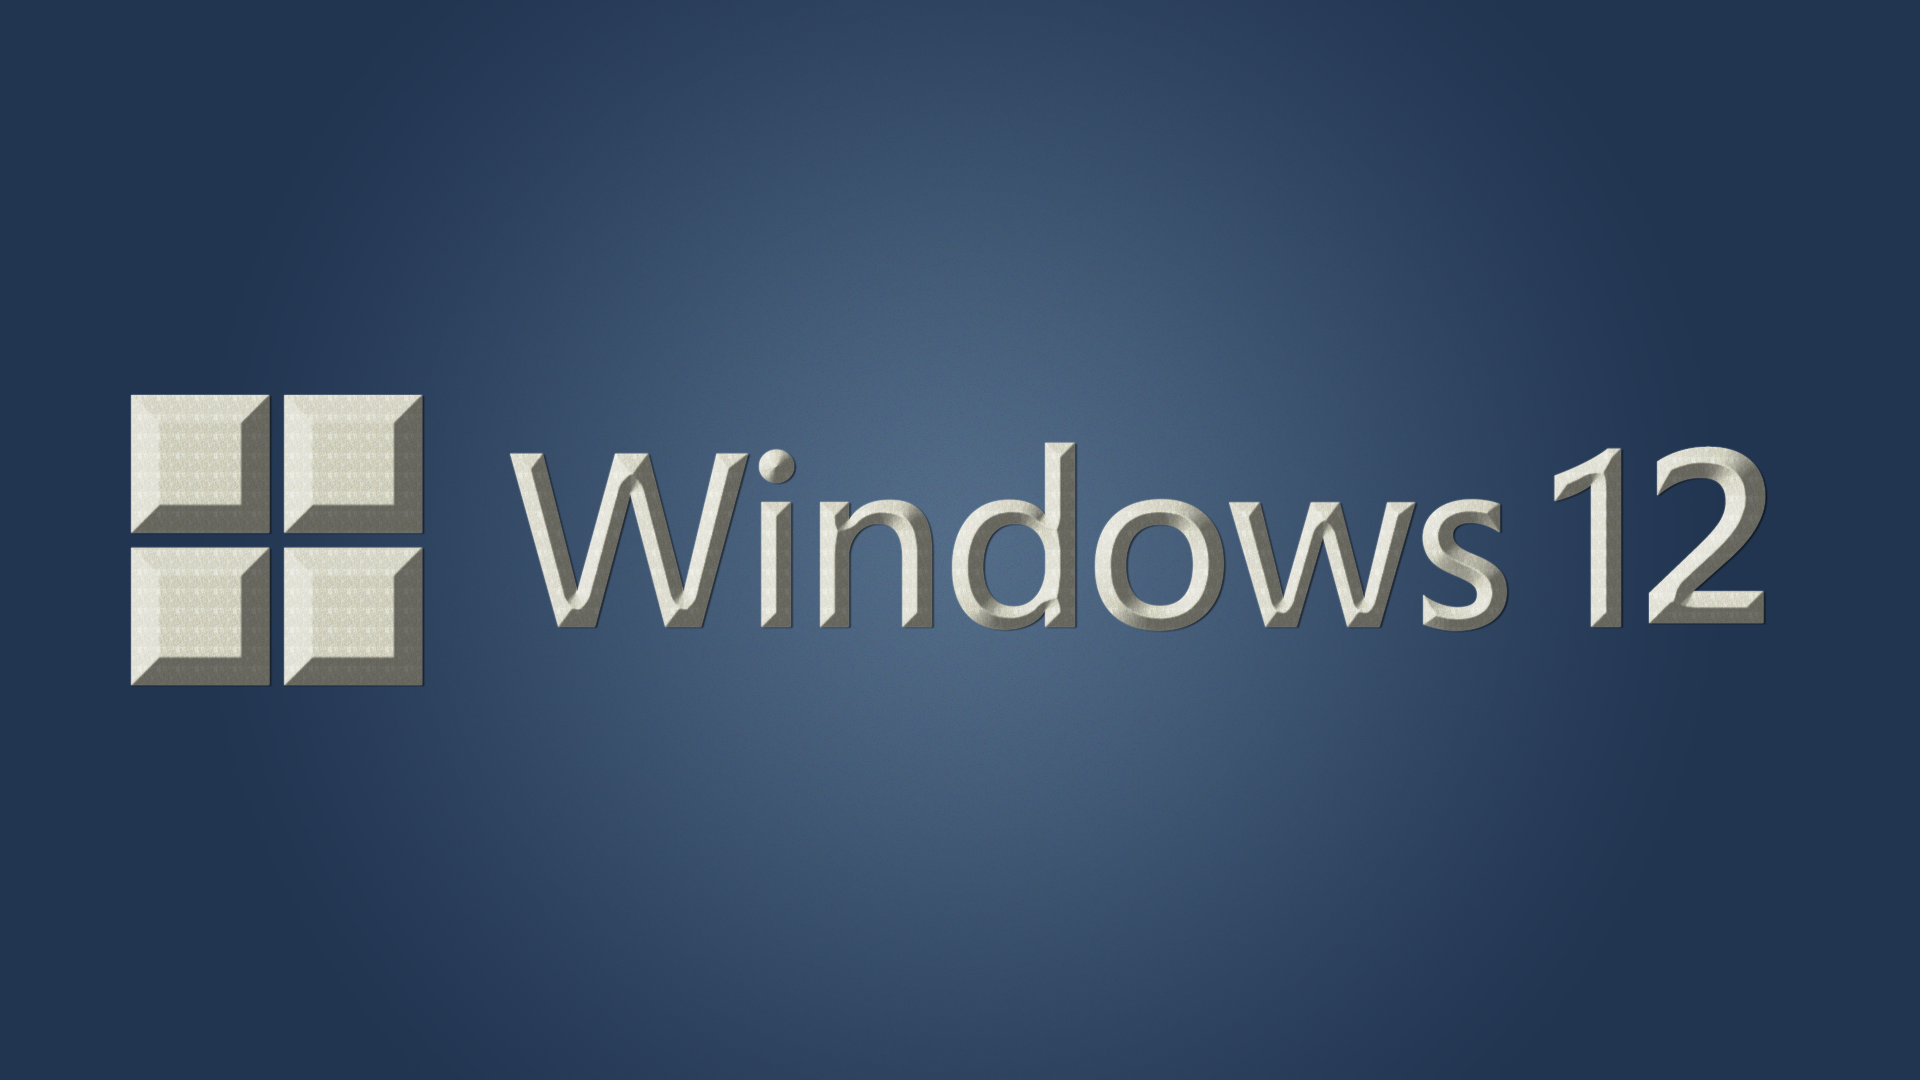 Microsoft may soon be testing Windows 12 code